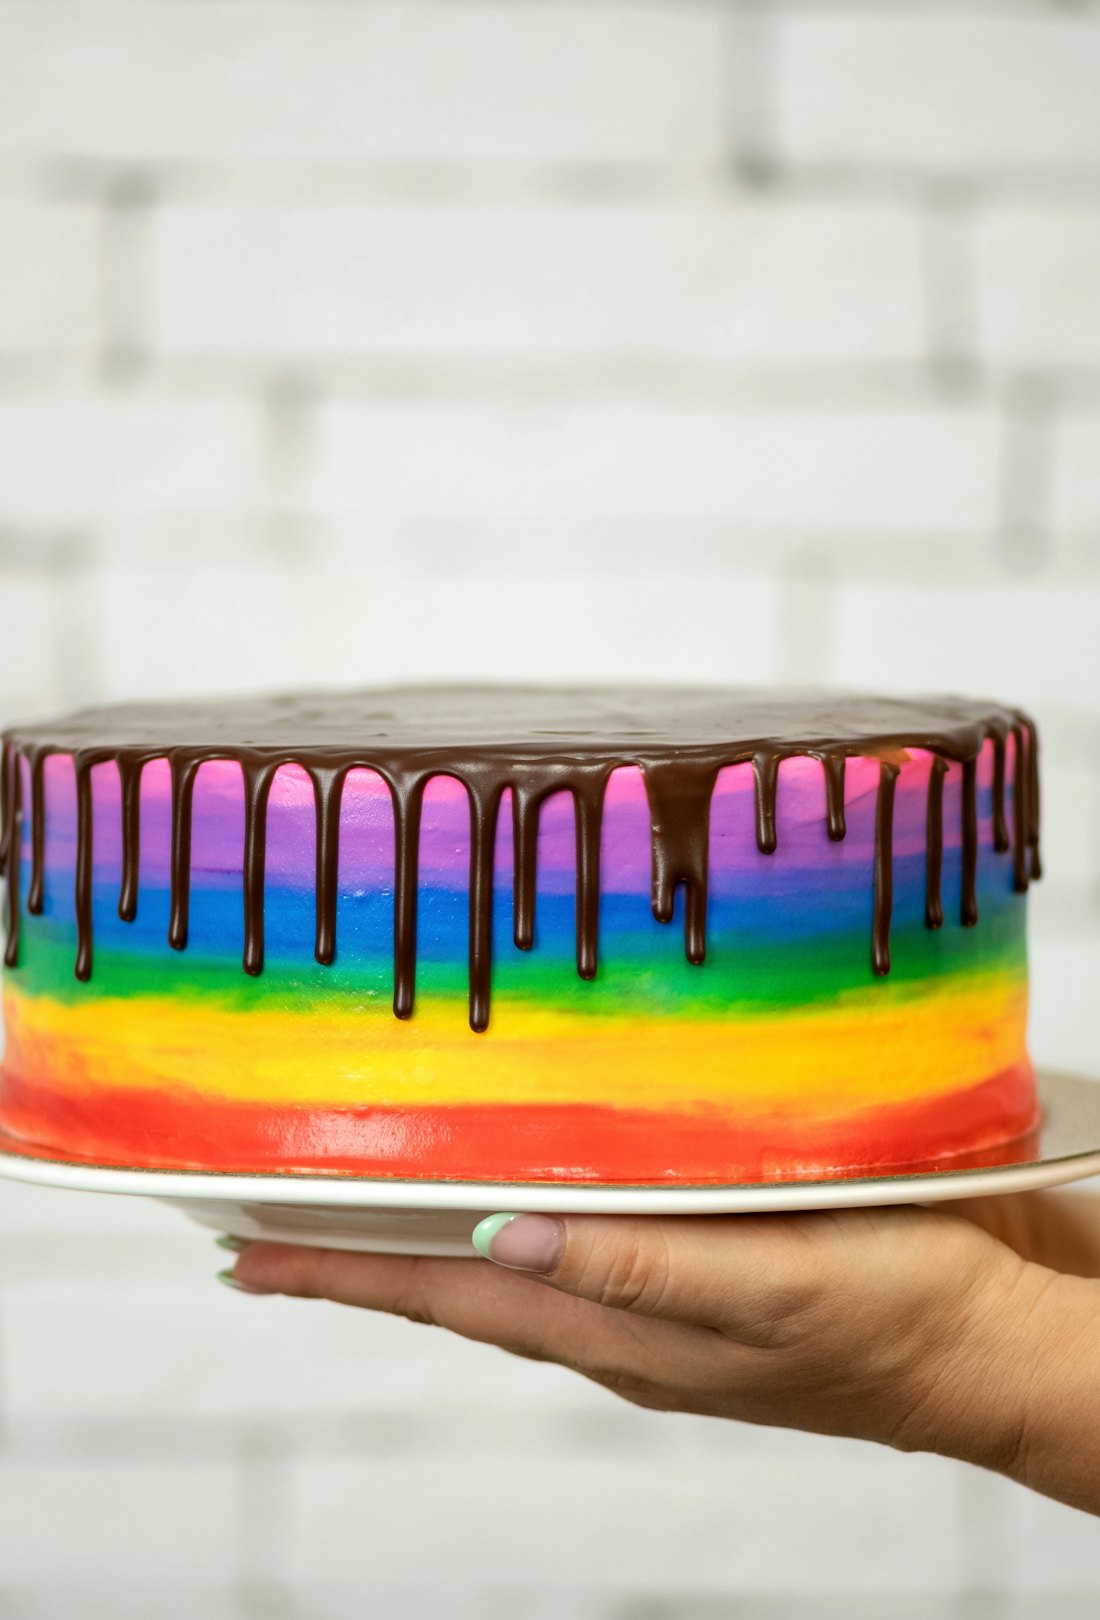 A rainbow cake to celebrate Pride.